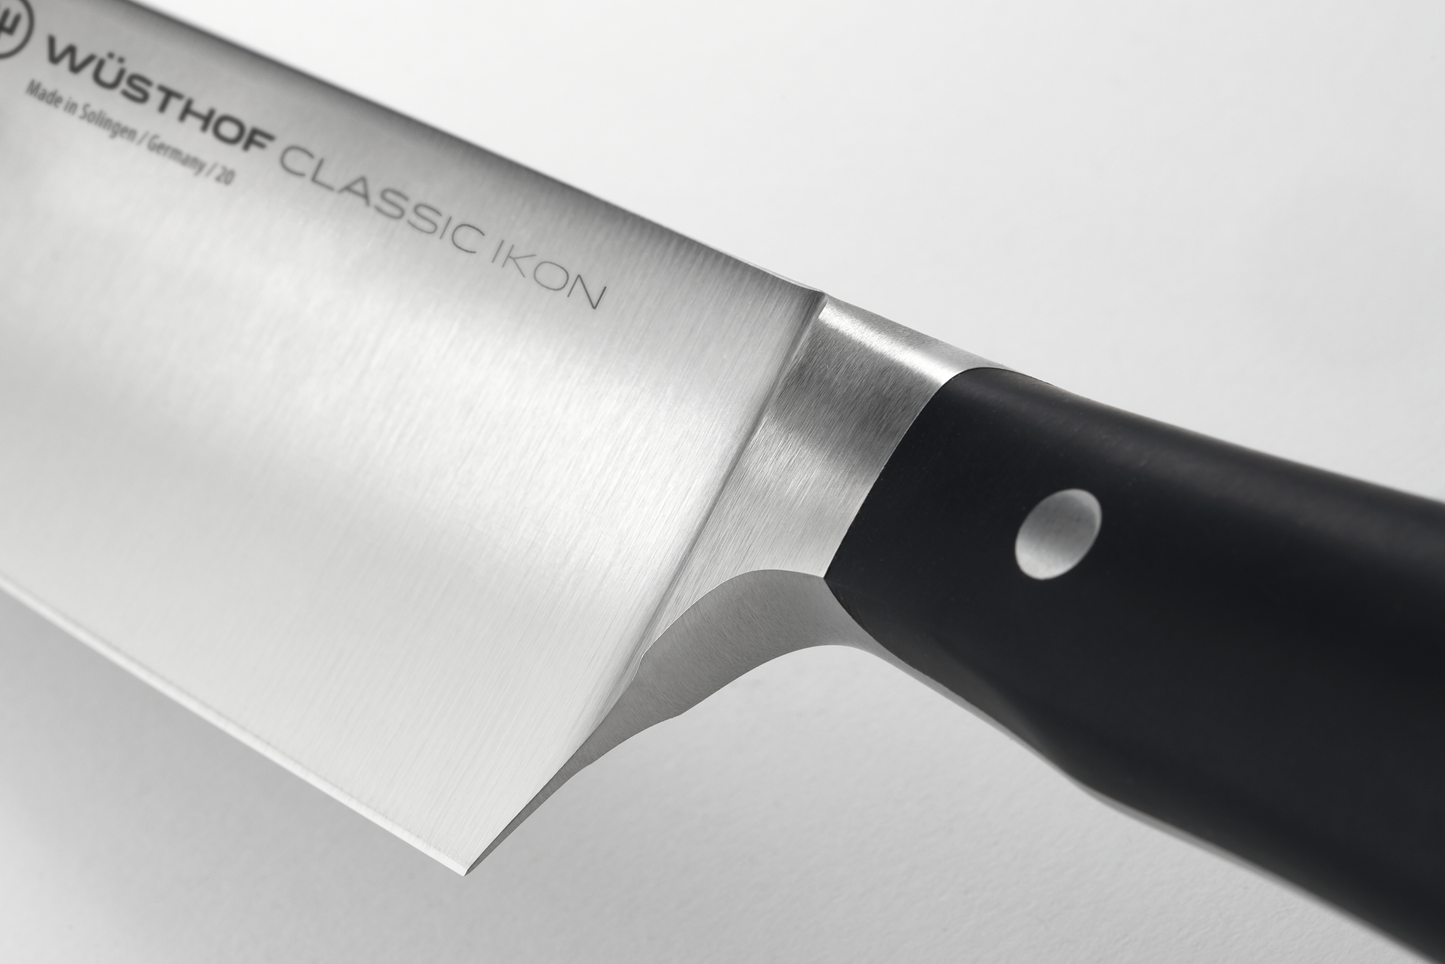 Classic Ikon 2-piece Chef's Knife Set